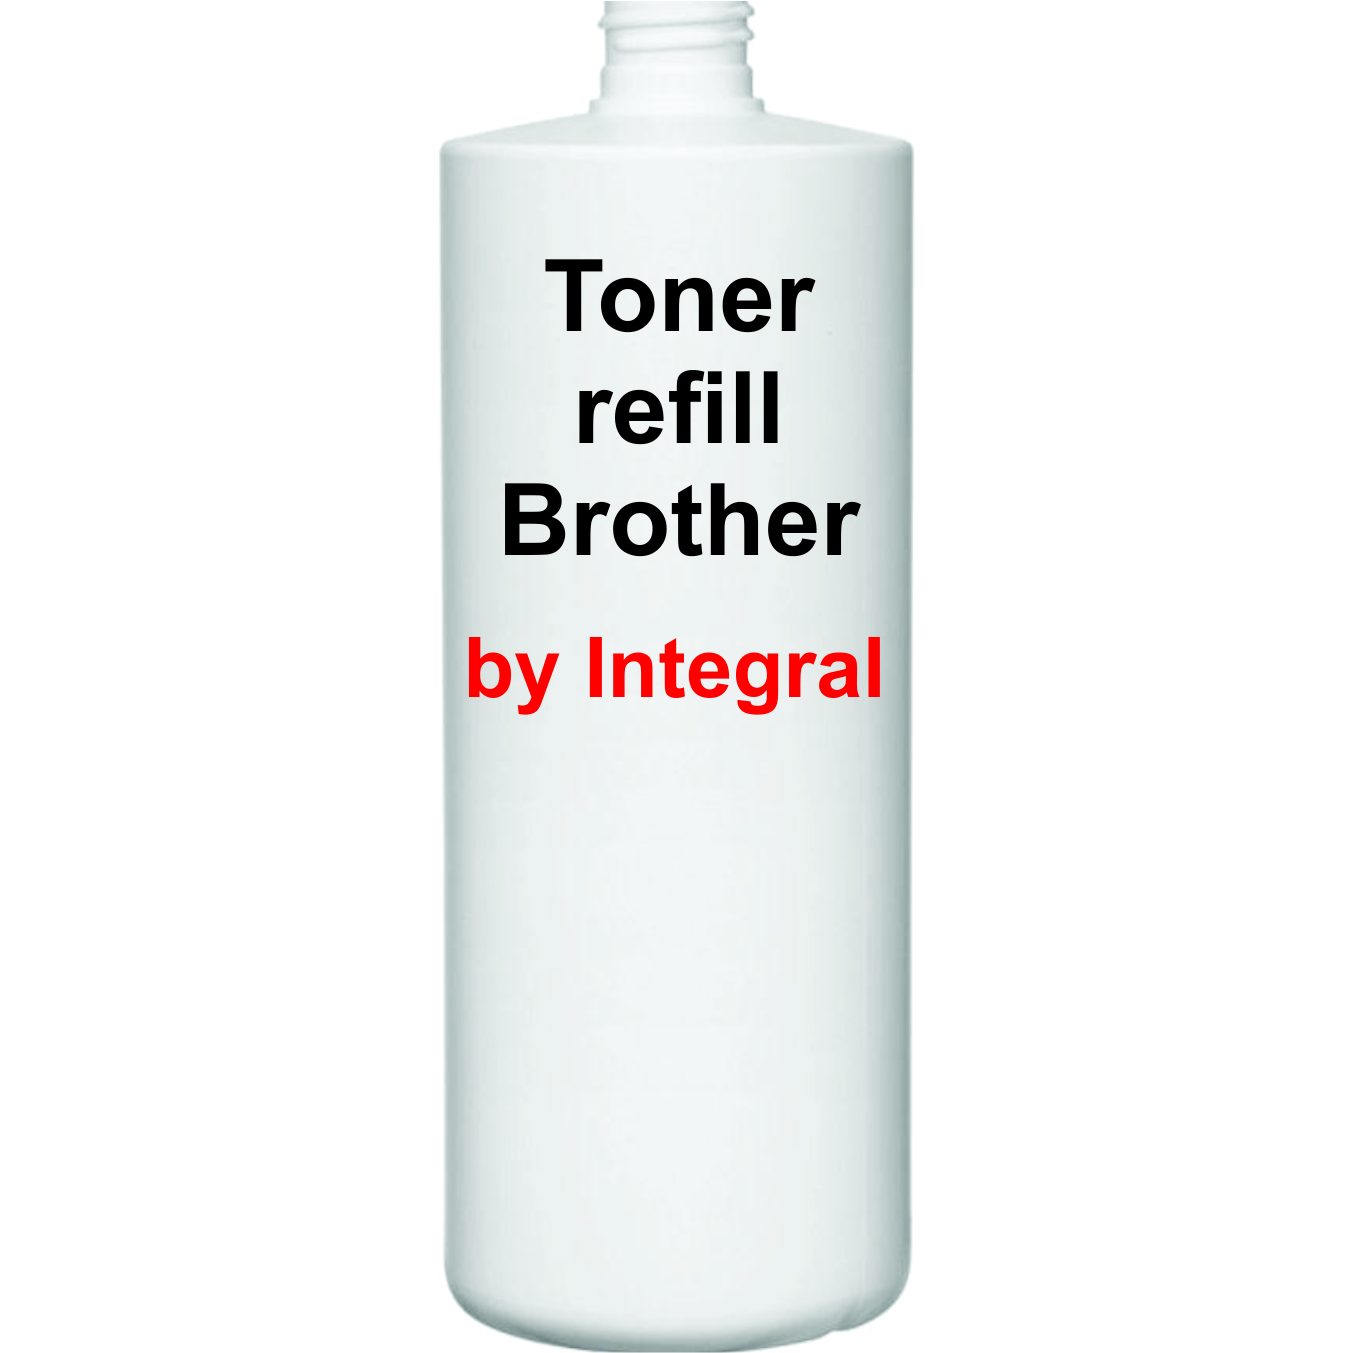 Toner refill Brother TN-B023 1000g by Integral